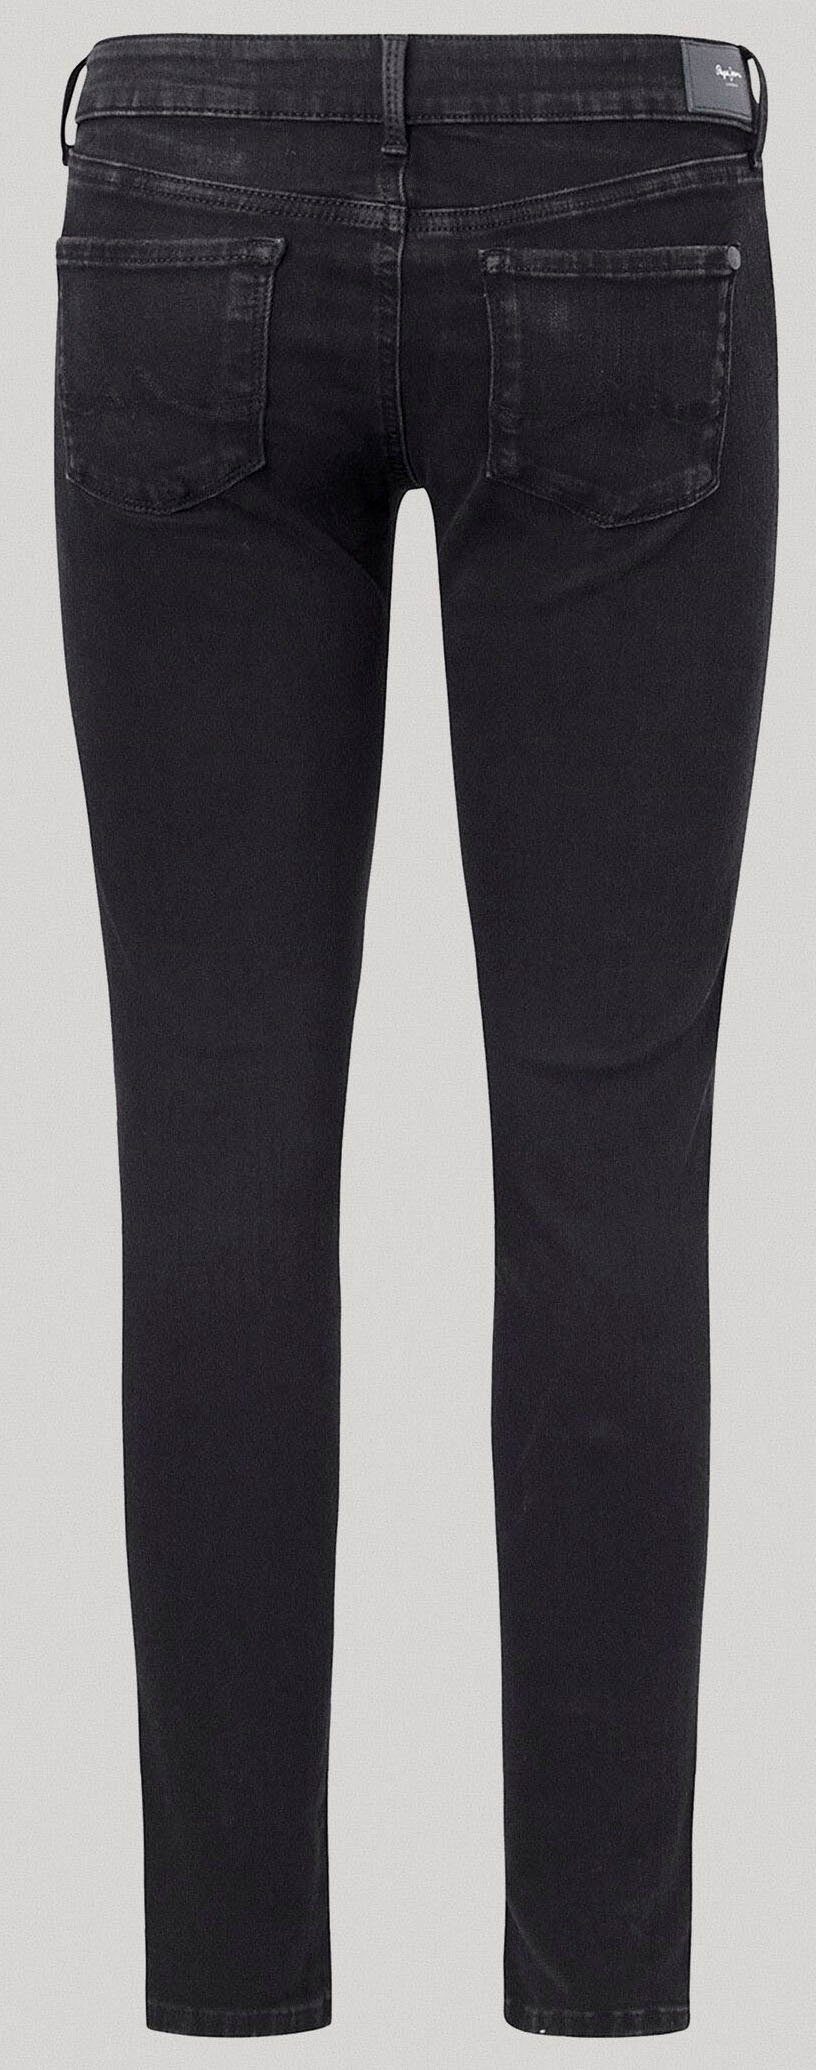 Pepe Jeans im black Stretch-Anteil 5-Pocket-Stil und mit 1-Knopf Bund Skinny-fit-Jeans SOHO